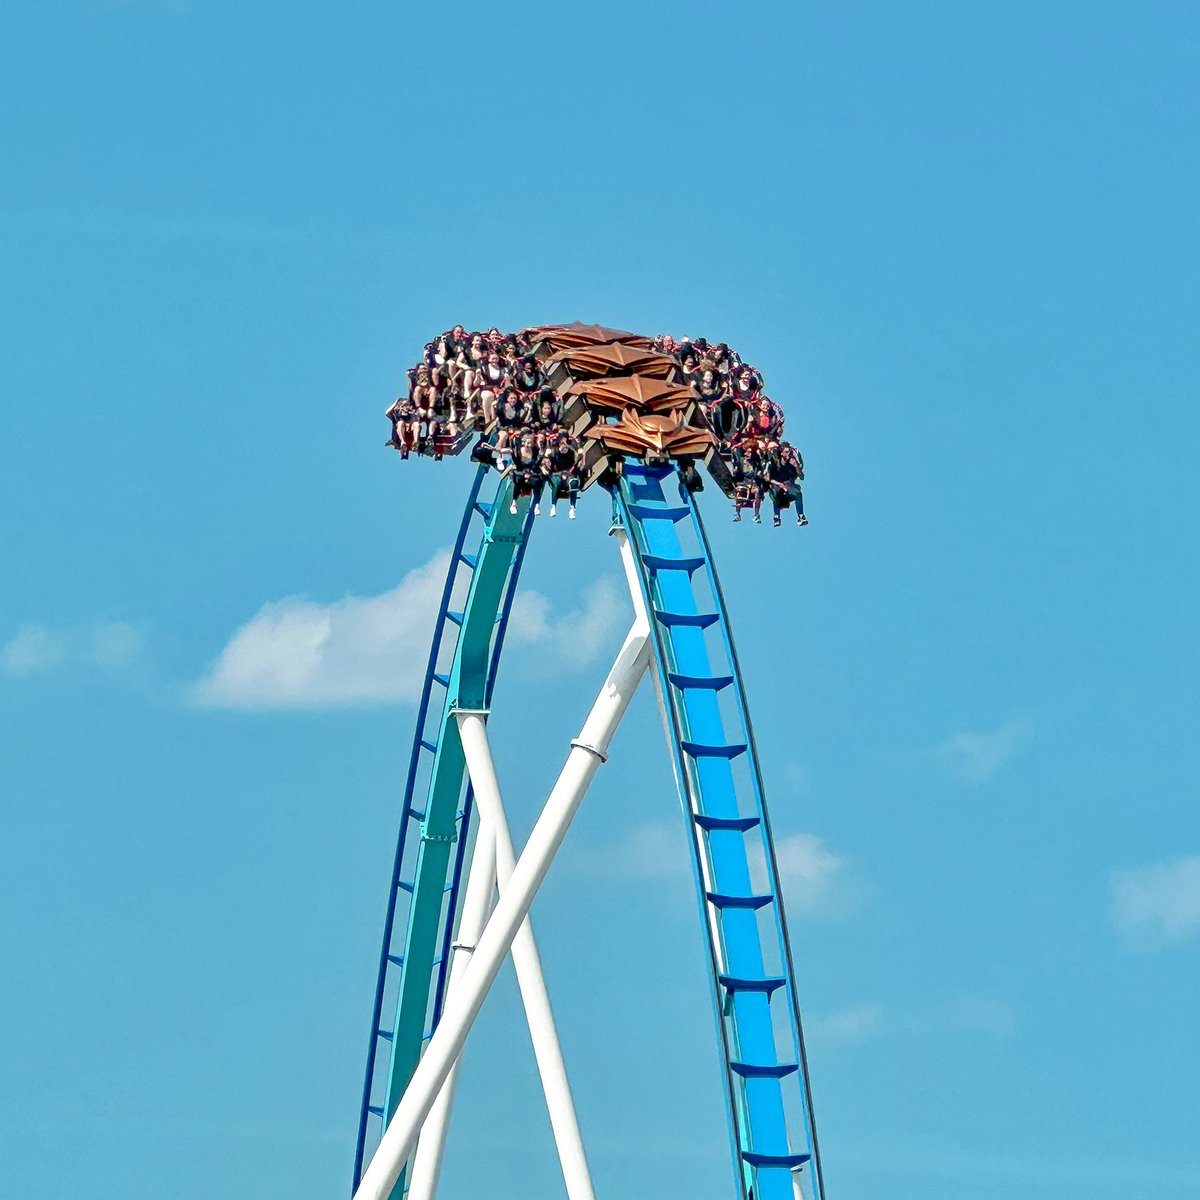 Gatekeeper at Cedar Point looking fierce! 

#gatekeeper #cedarpoint #cedarfair #sandusky #ohio #bolligerandmabillard #themepark #rollercoaster #amusementpark #coasterenthusiast #thrillride #travel #photography